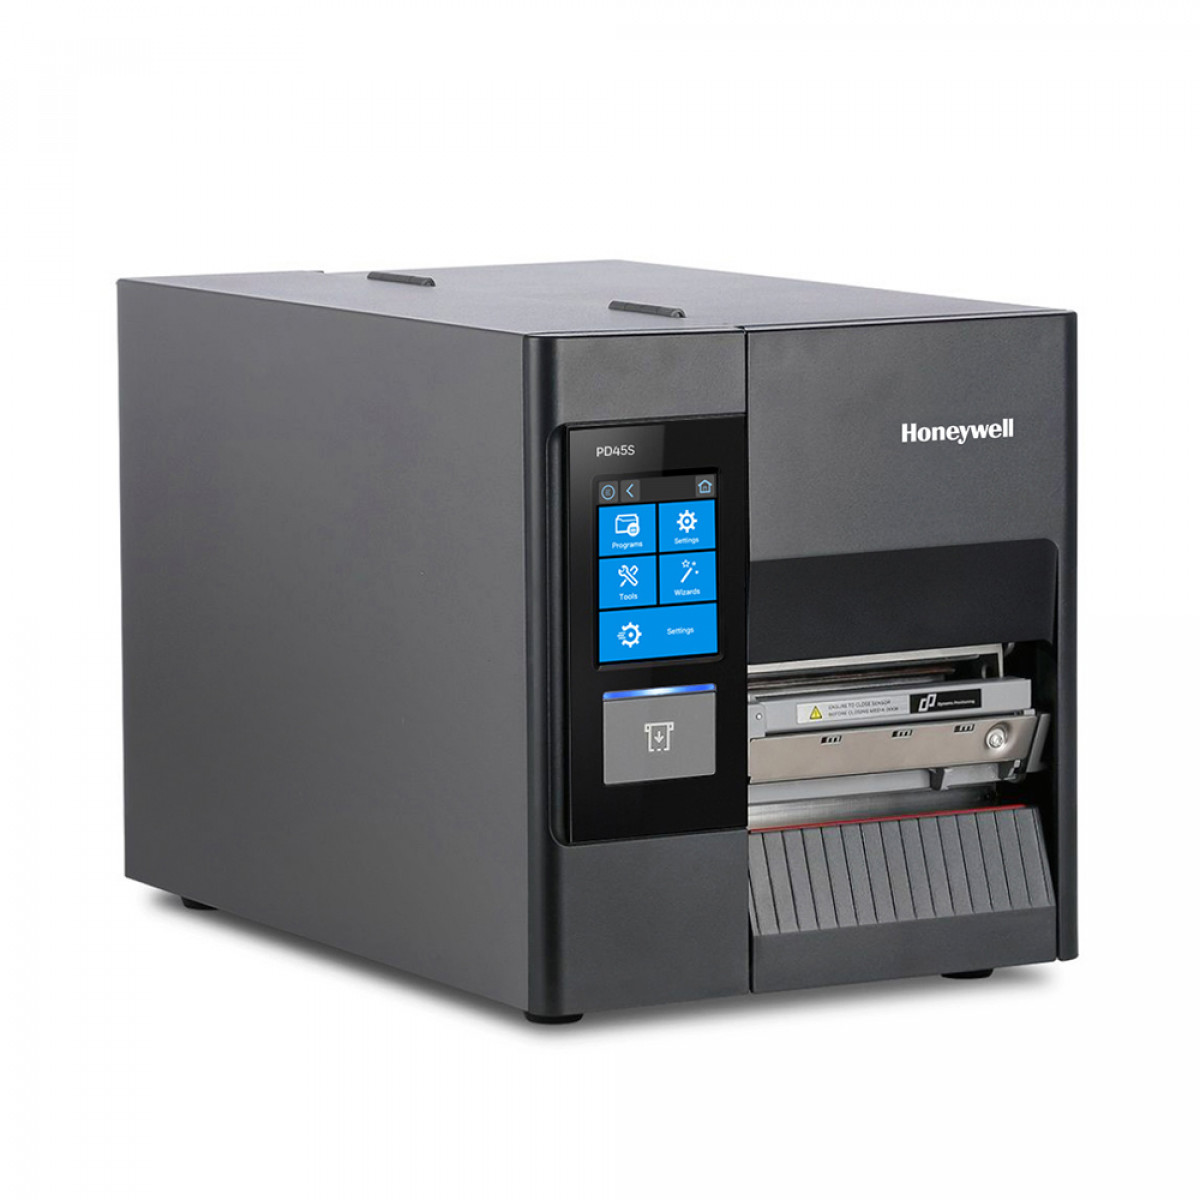 Honeywell PD45S commercial grade printer